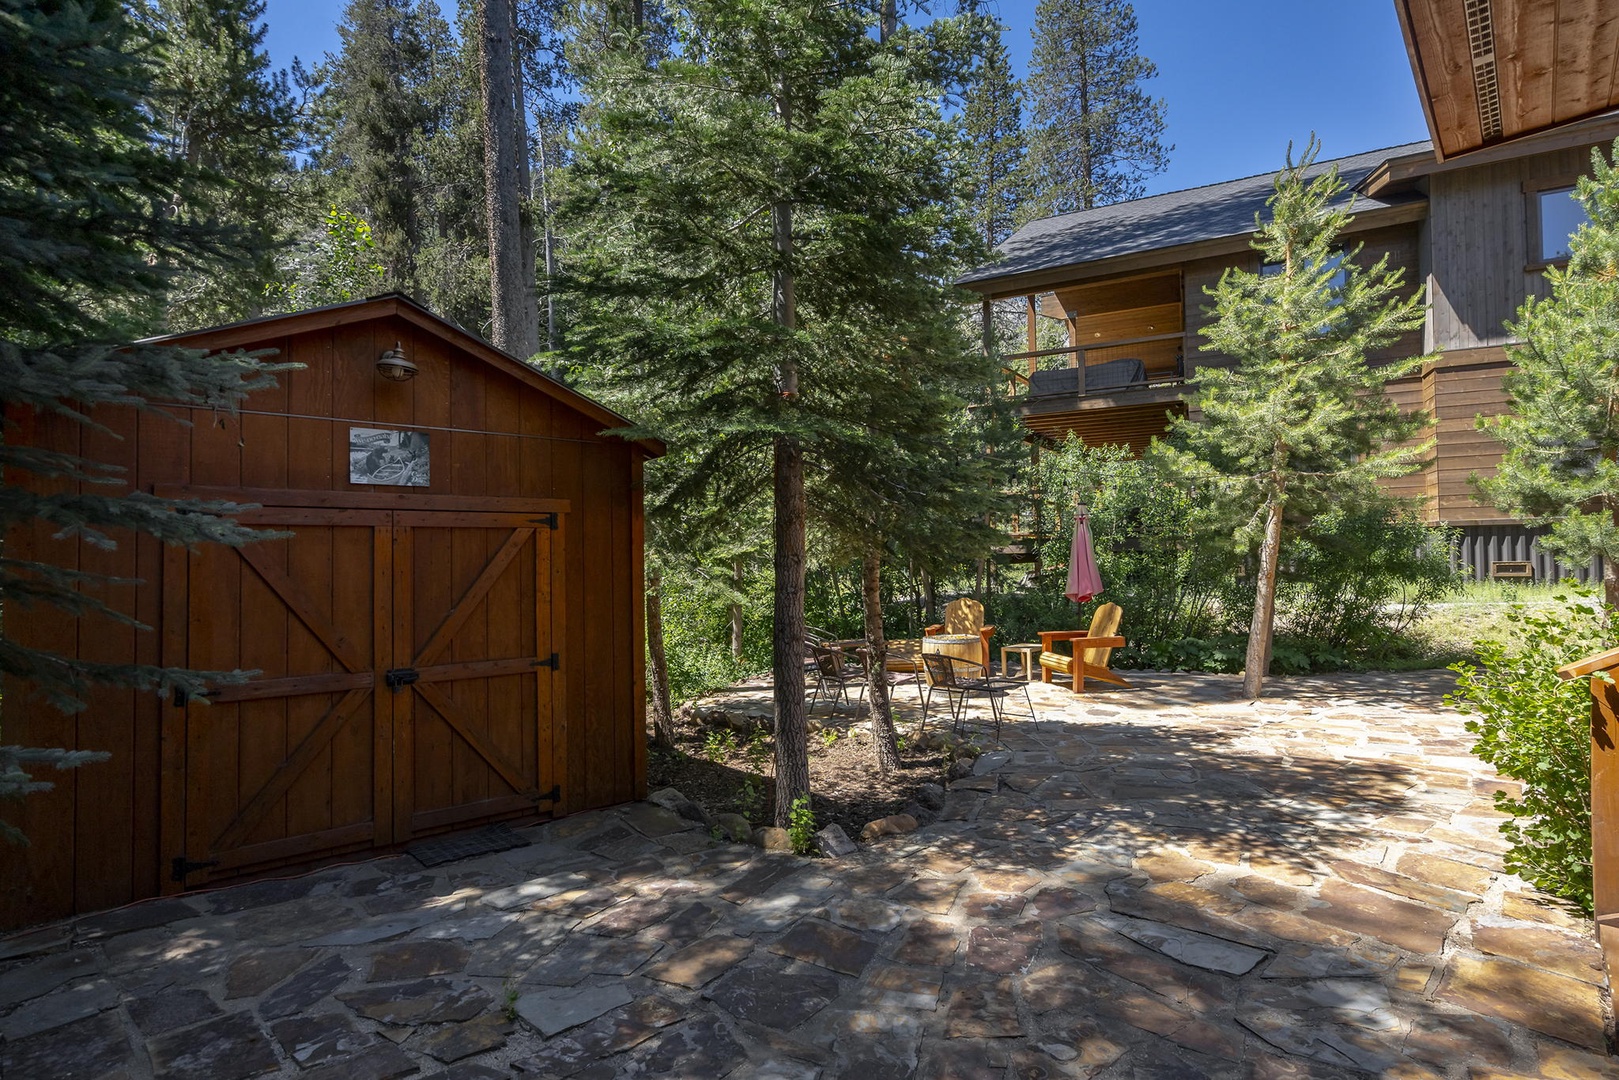 Backyard: 
Donner Lake Vacation Lodge